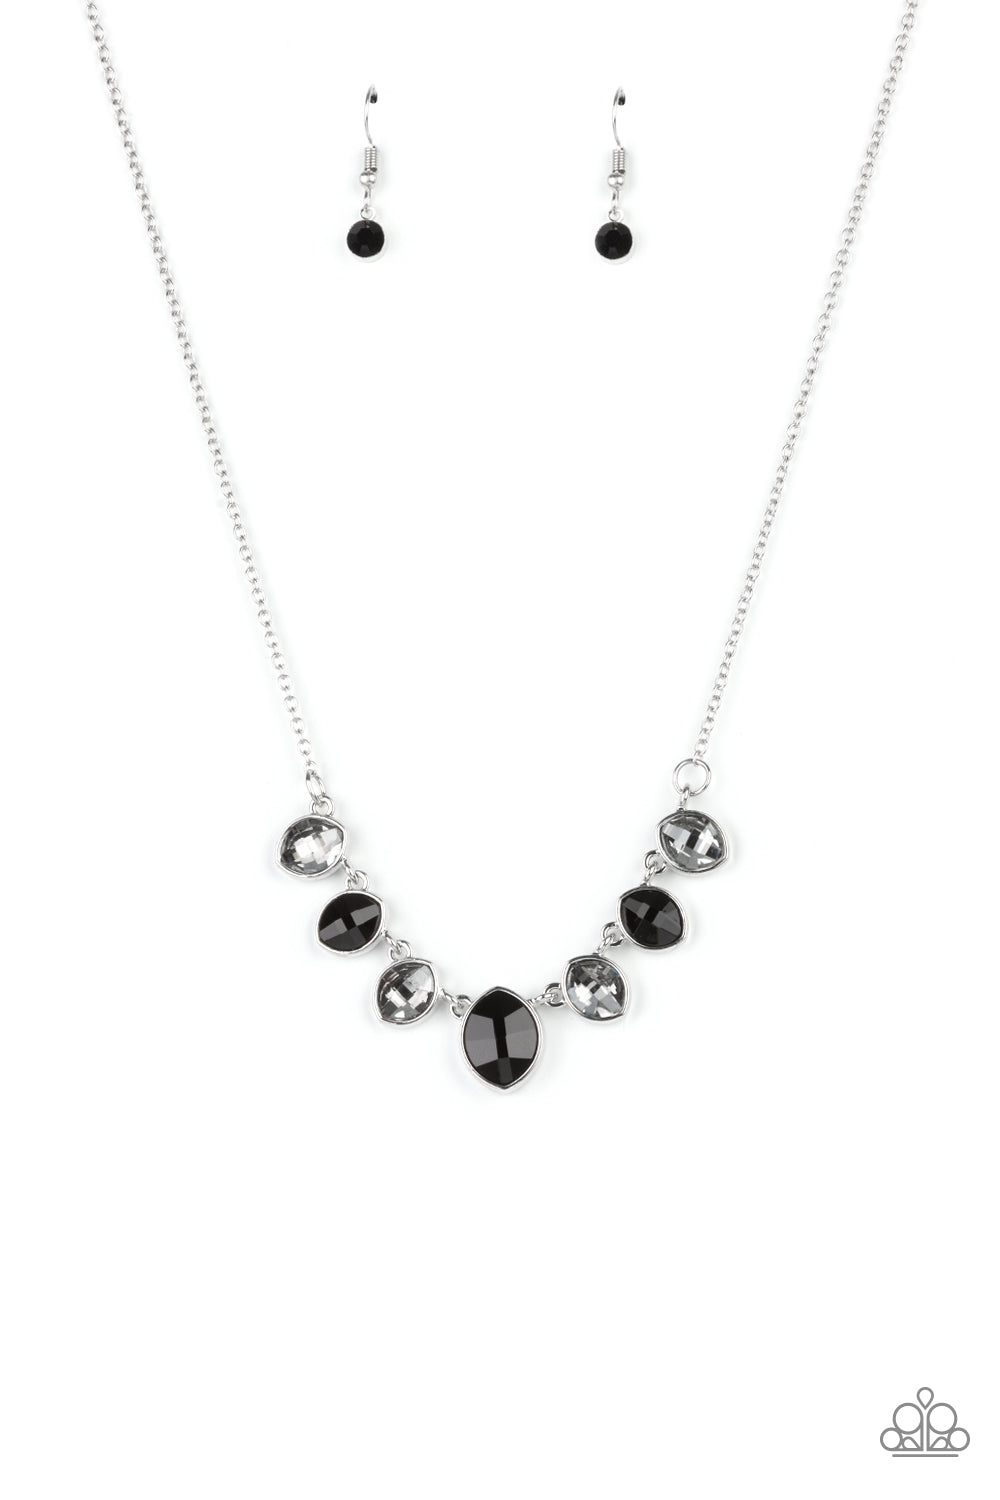 Material Girl Glamour - Black Rhinestone Necklace - Paparazzi Accessories - GlaMarous Titi Jewels